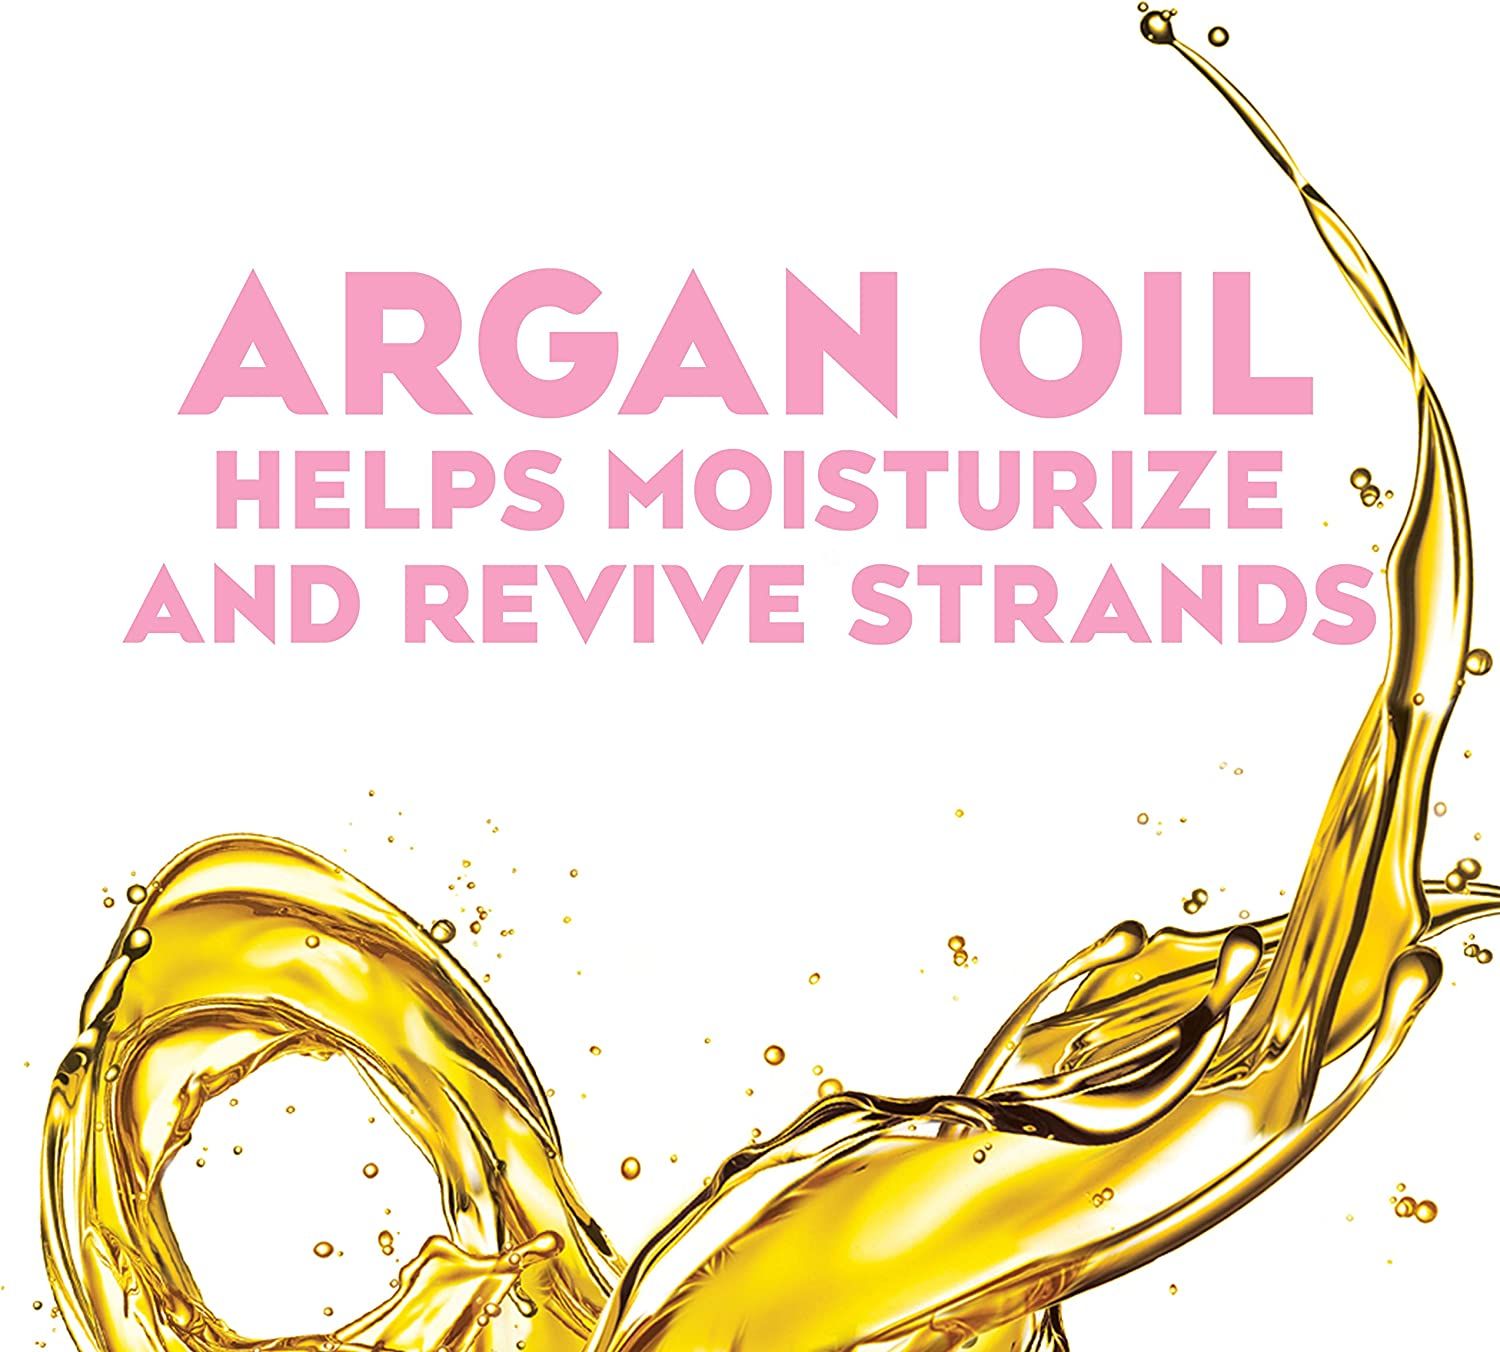 Renewing + Argan Oil Of Morocco Shampoo 385 Ml